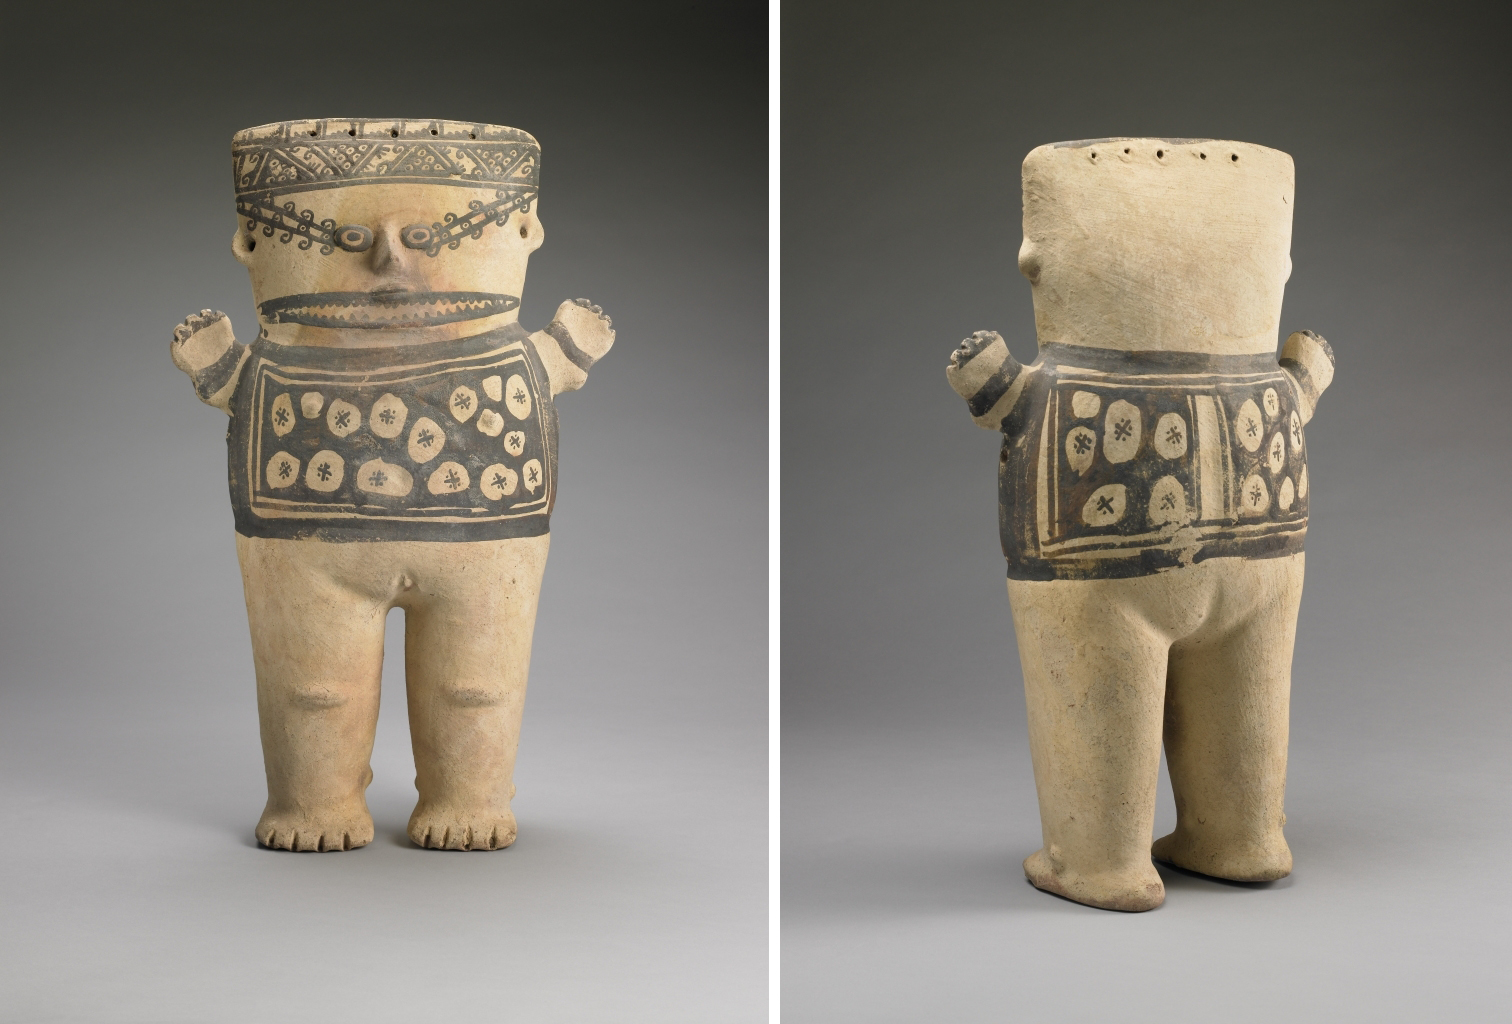 Chancay Standing Female Figure, 1200 - 1450, ceramic, 18 1/4 x 11 3/4 x 5 inches (Michael C. Carlos Museum)